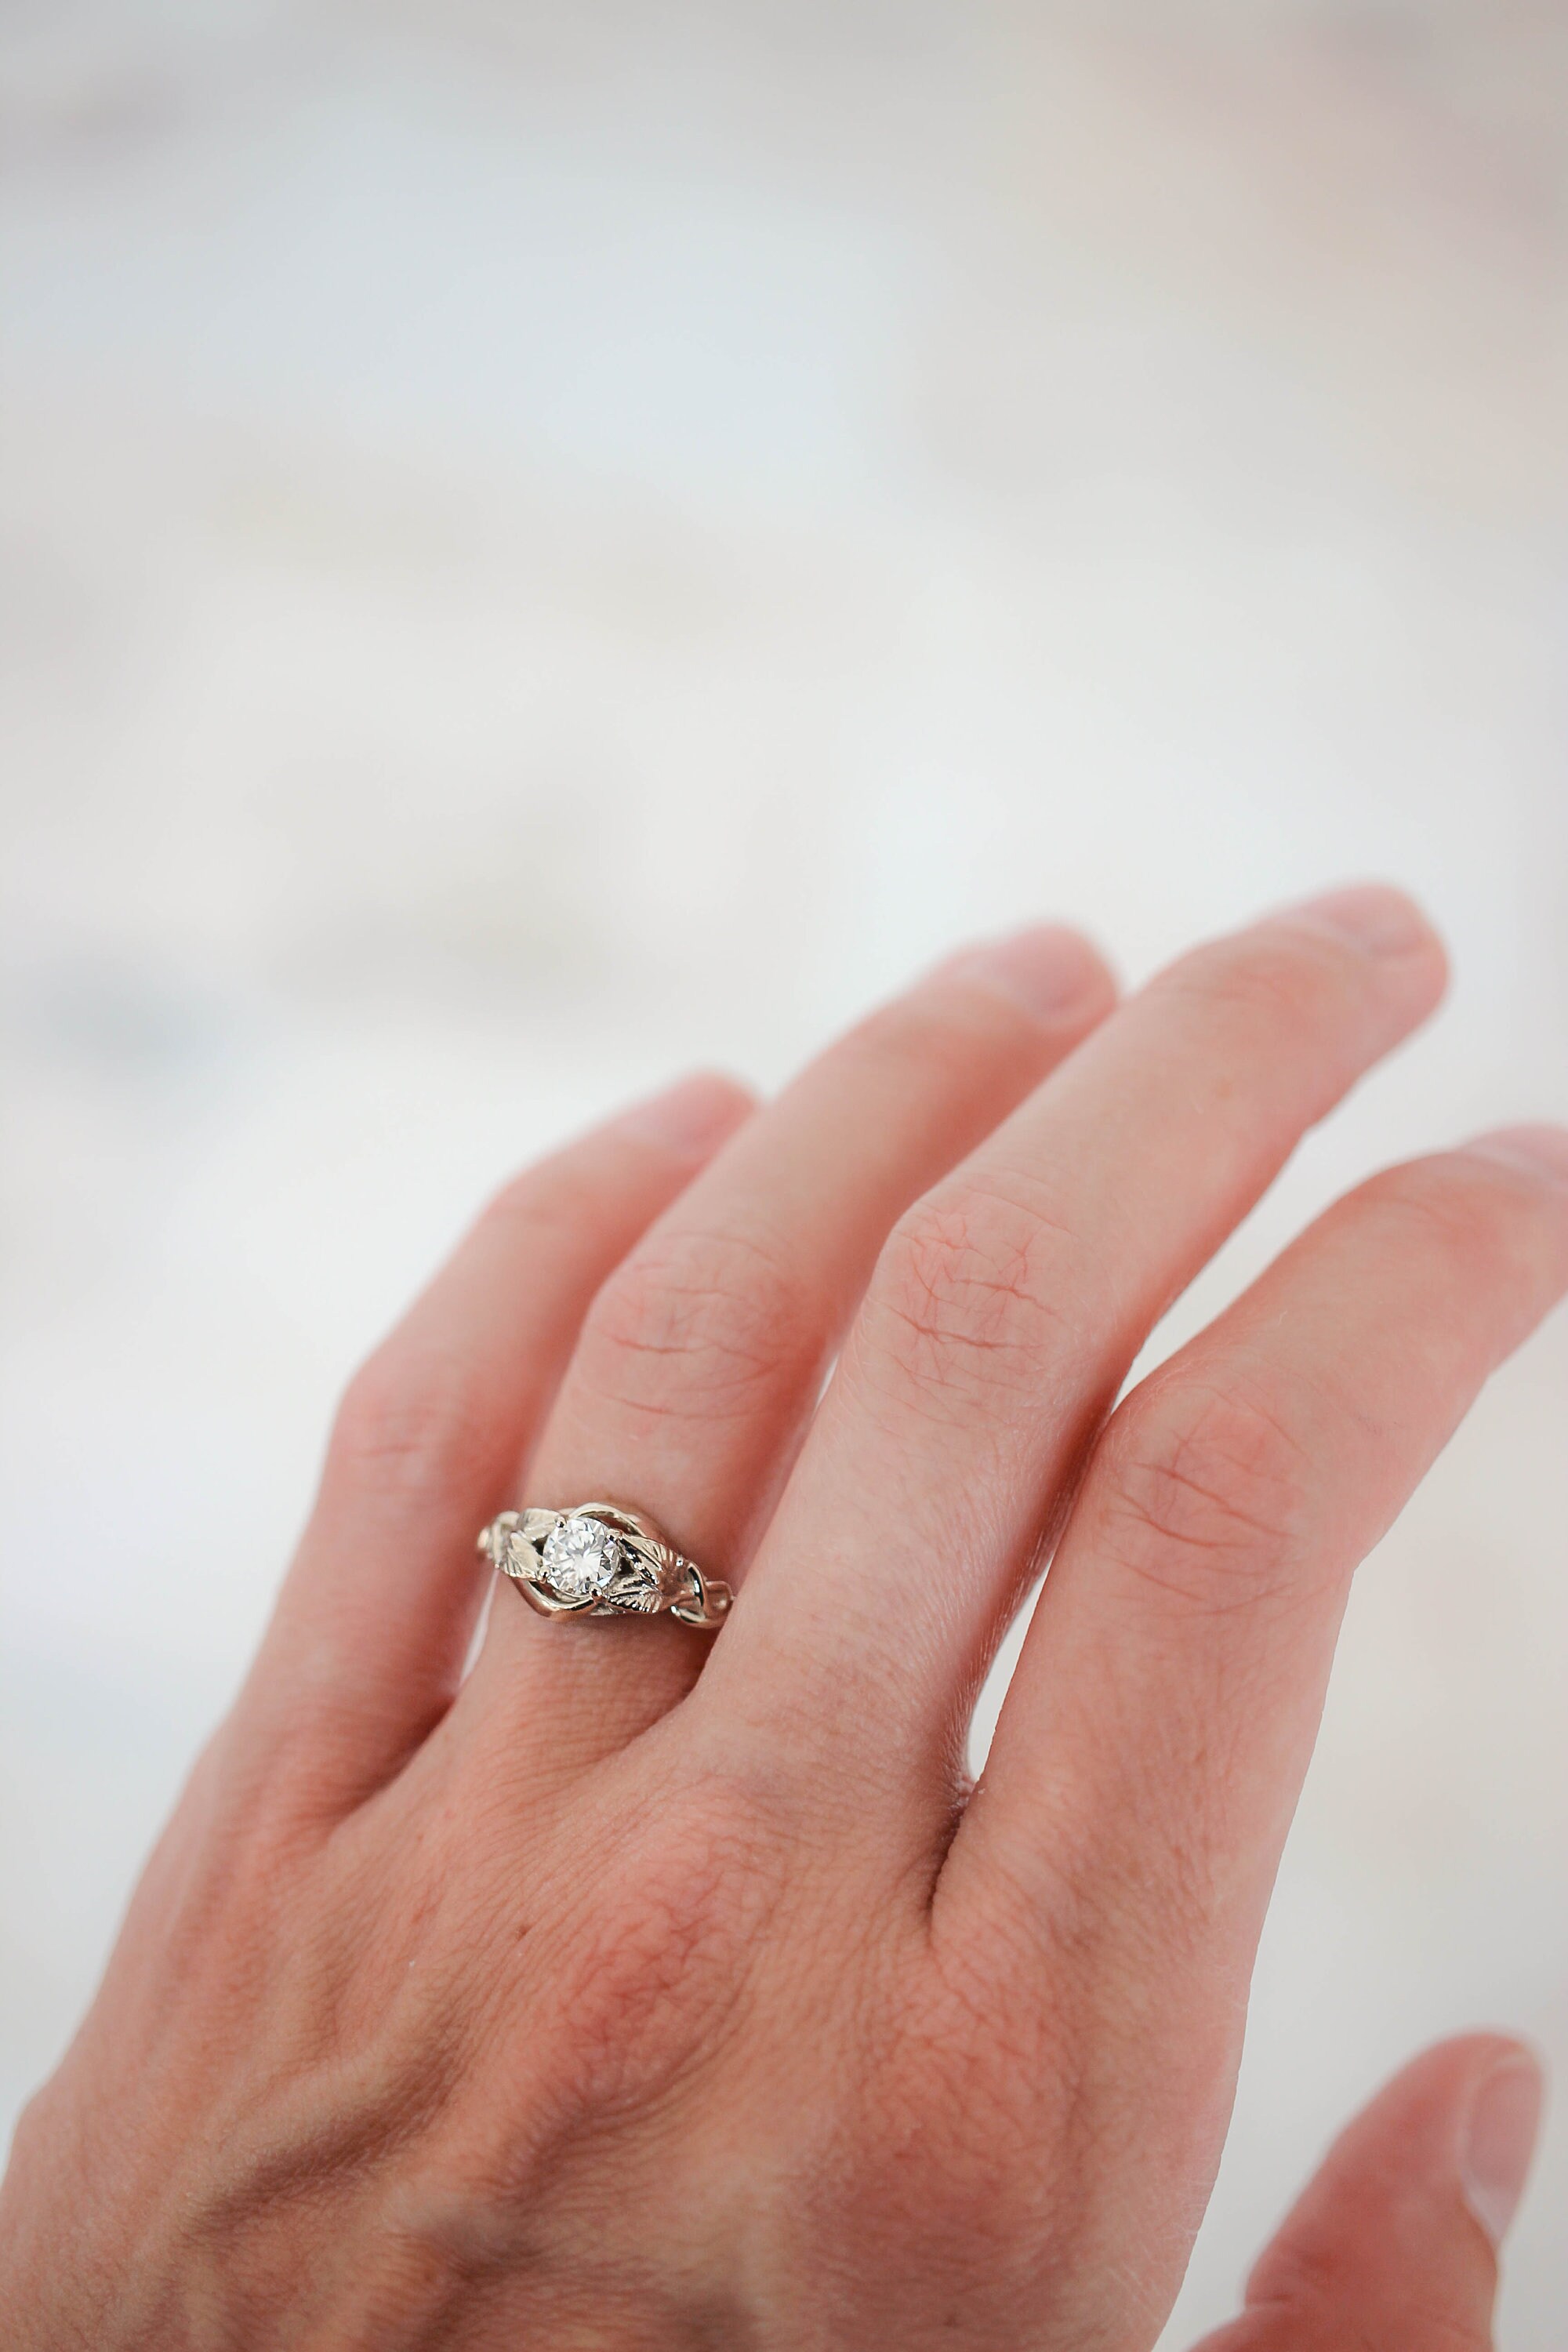 White gold diamond engagement ring certificated diamond ring | Etsy